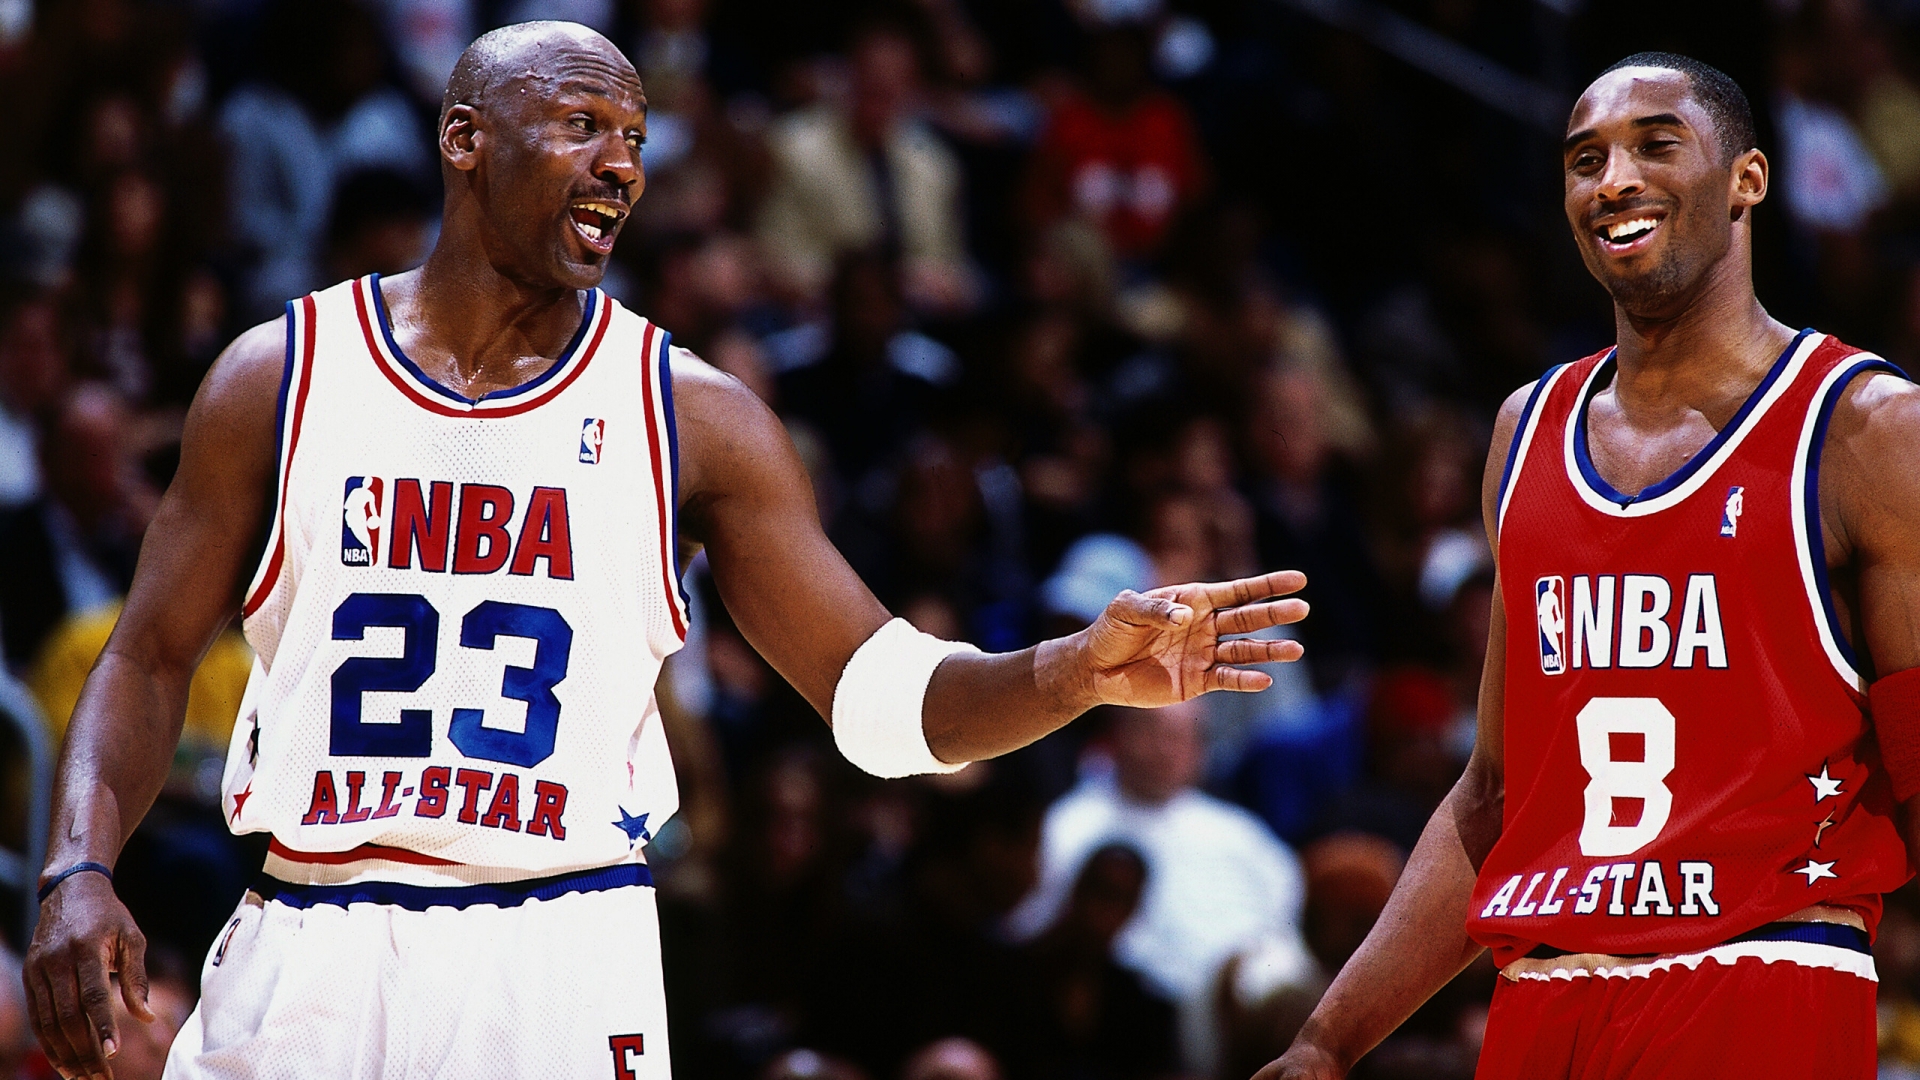 Kobe Bryant and Michael Jordan for 1920 x 1080 HDTV 1080p resolution